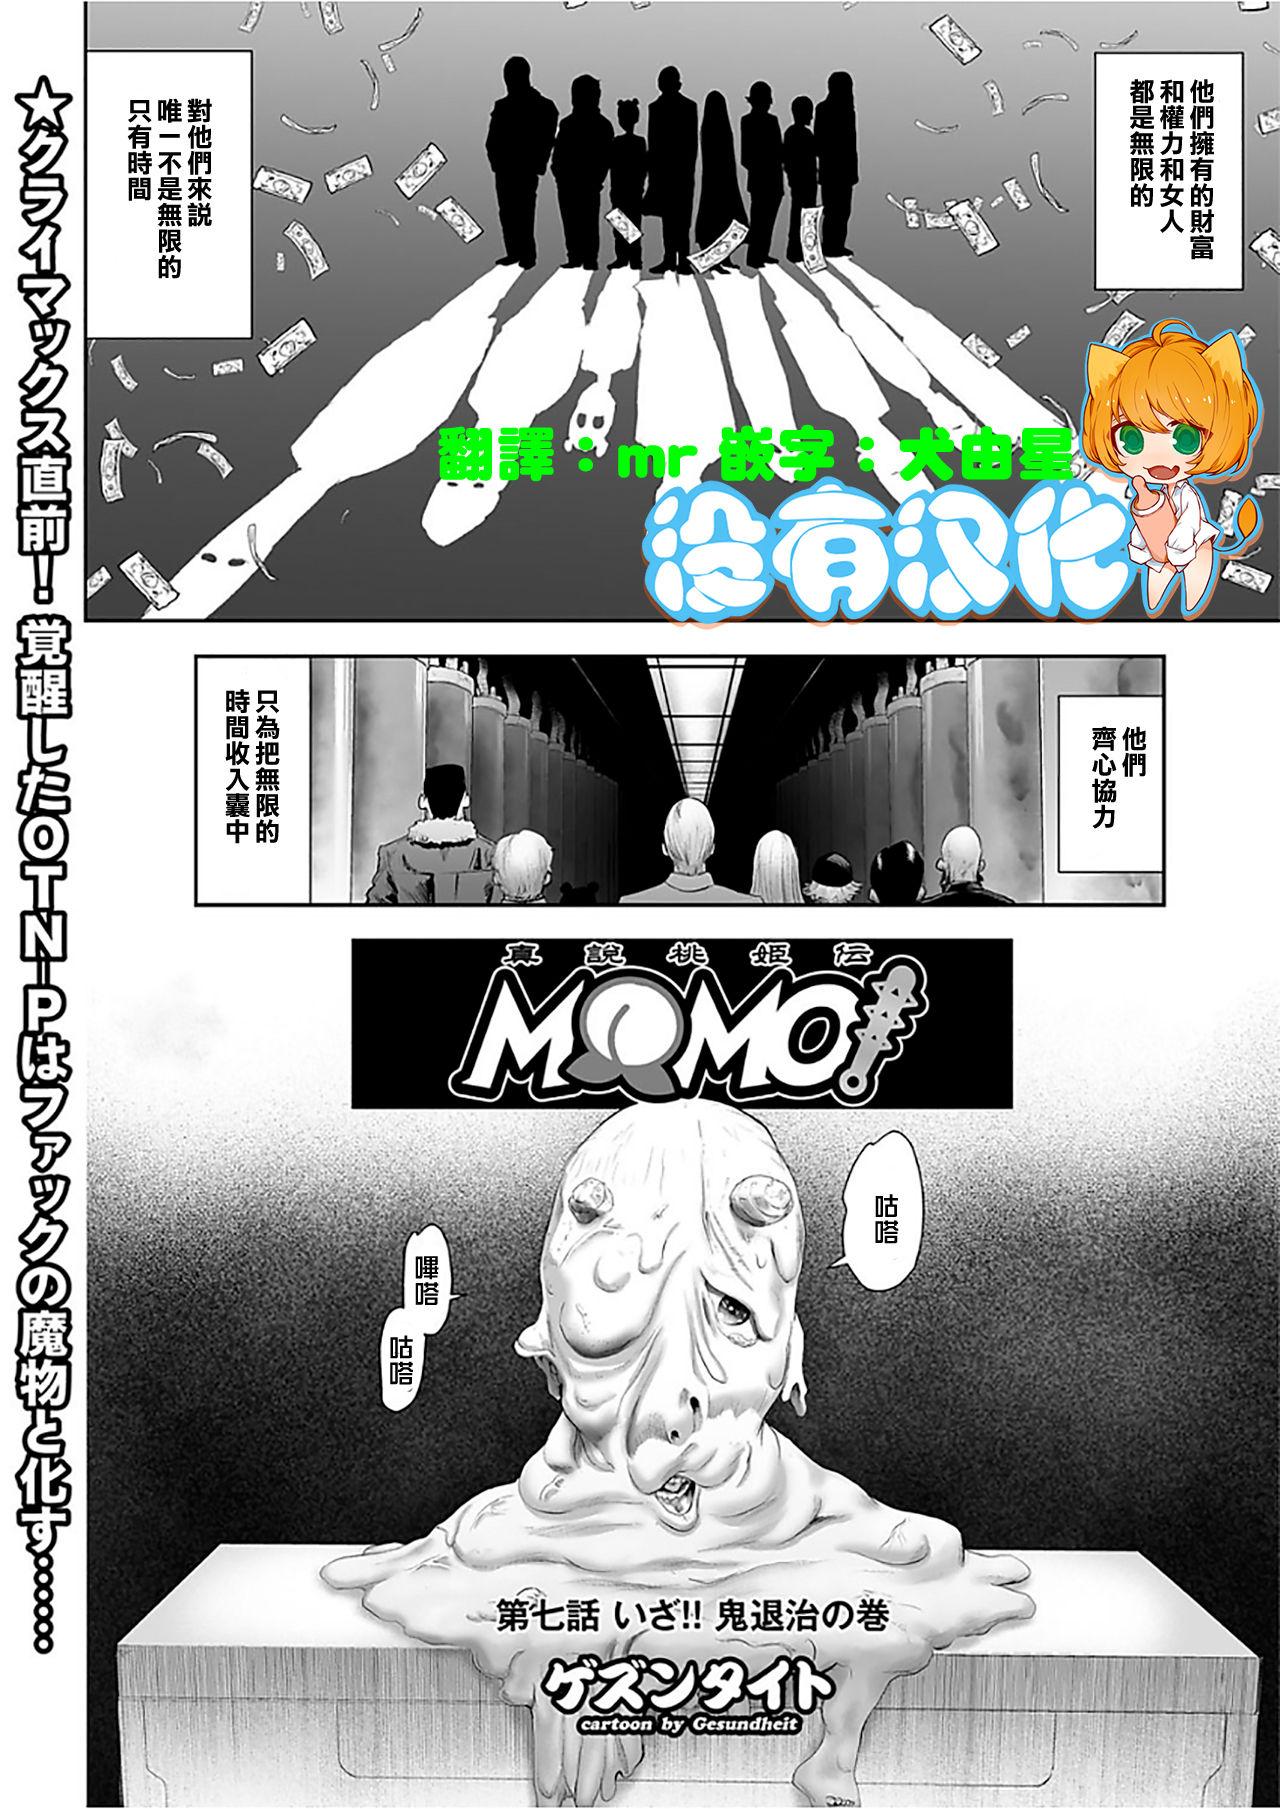 Slapping MOMO! Dainanawa Onitaiji No Ken Hot Girl - Picture 1